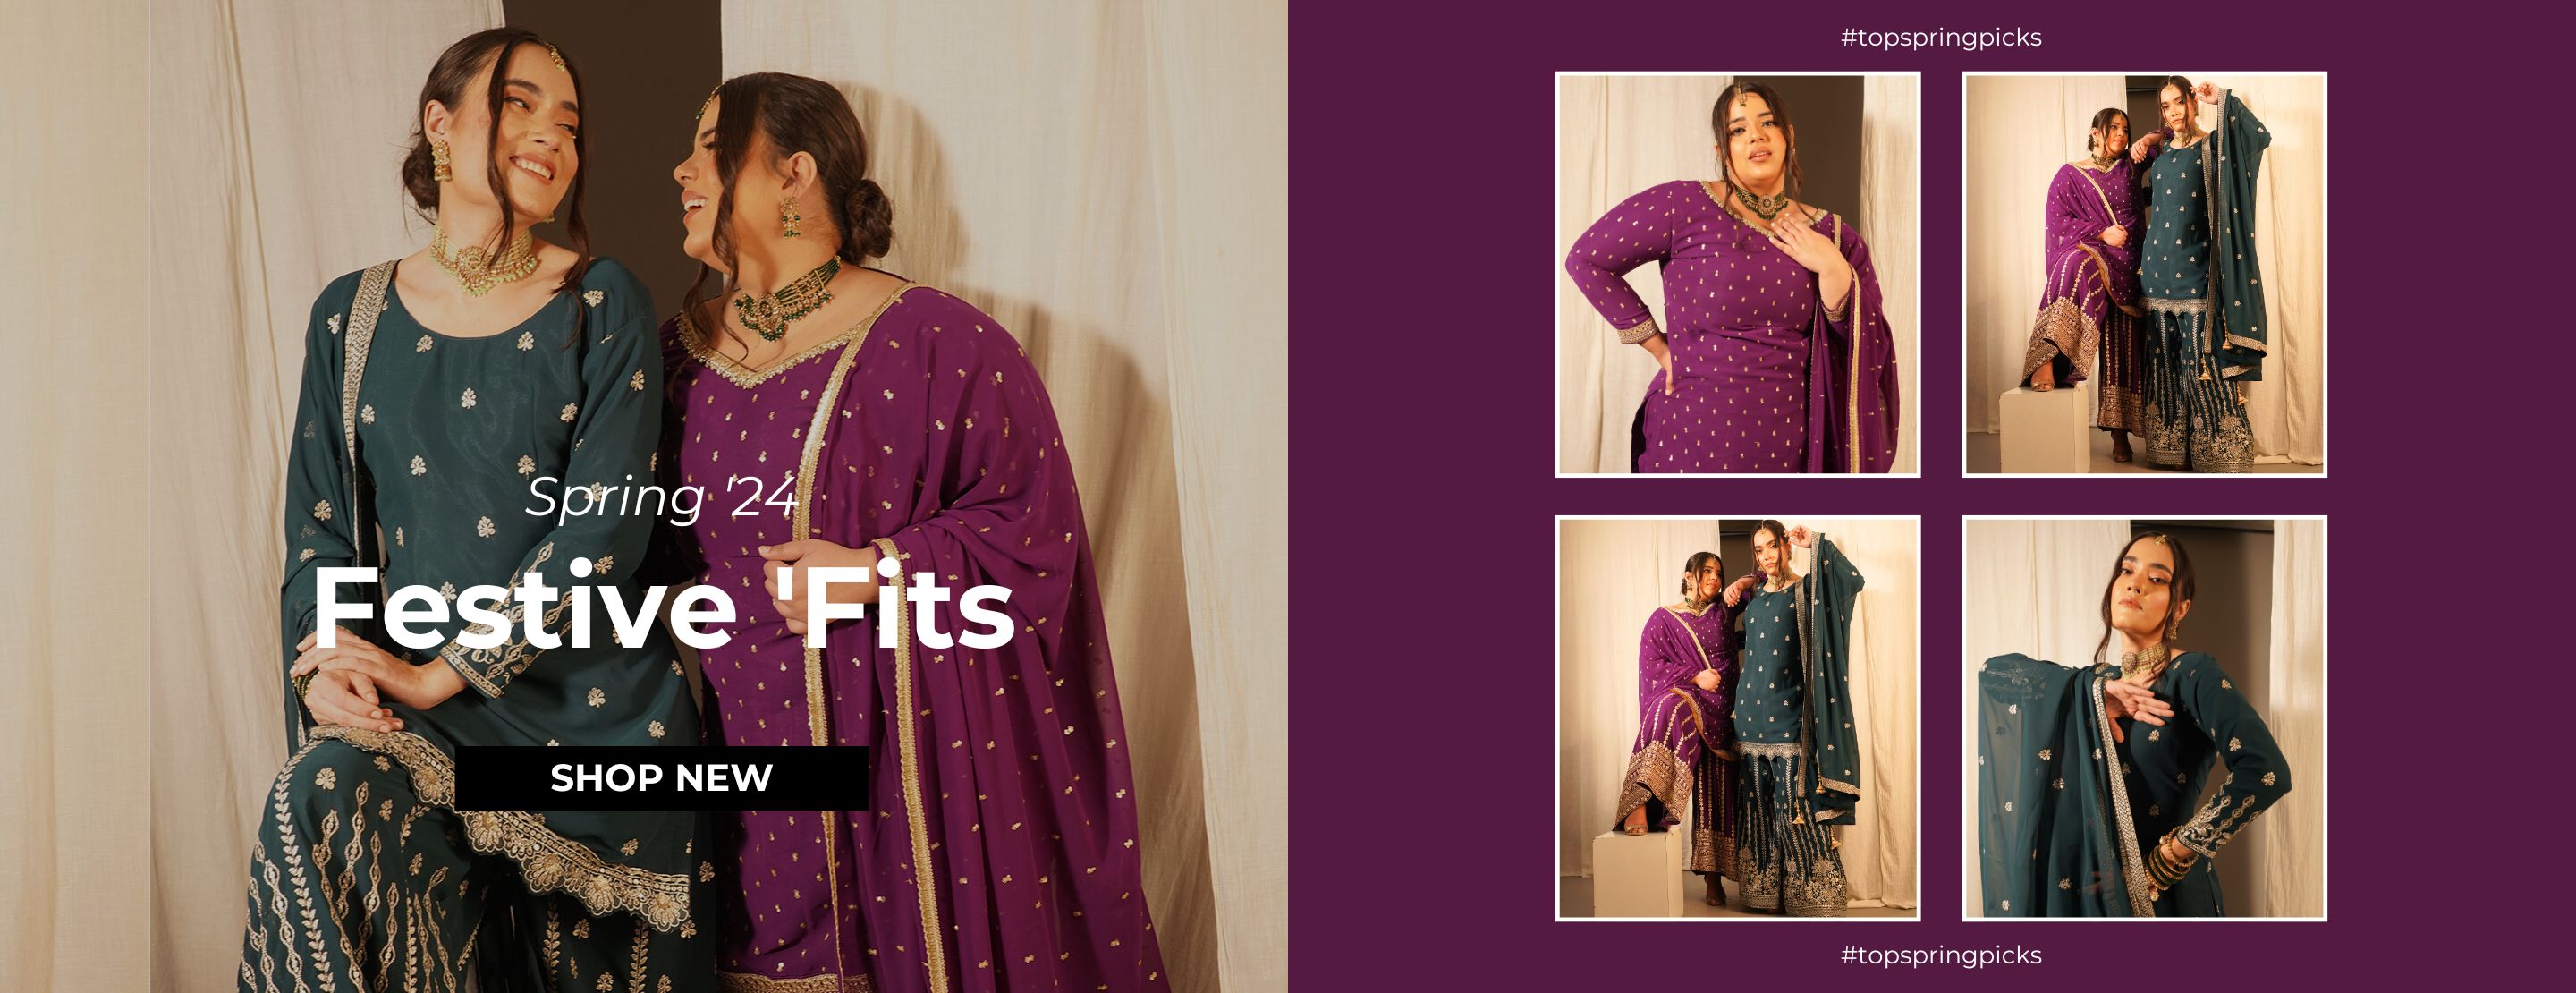 Ethnic Clothing For Eid | Eid Collection 2024 | Diya Online